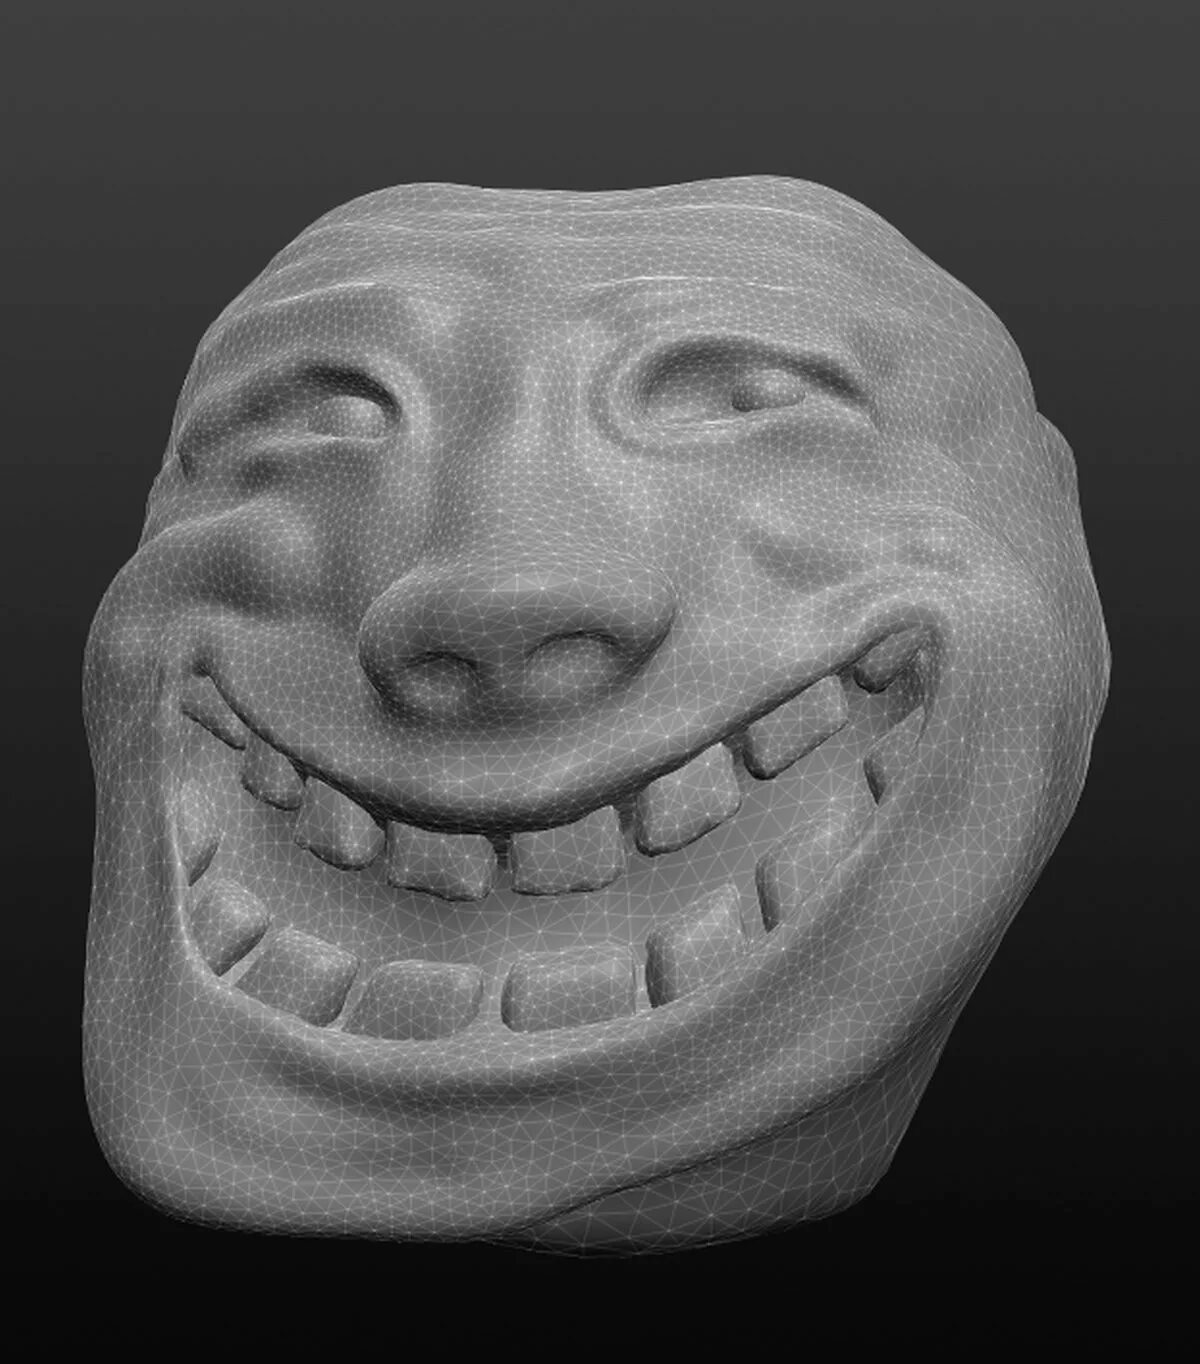 Trollface 3d. Trollface 3d model. Страшный троллфейс 3д модель. Кольцо троллфейс 3д модель.